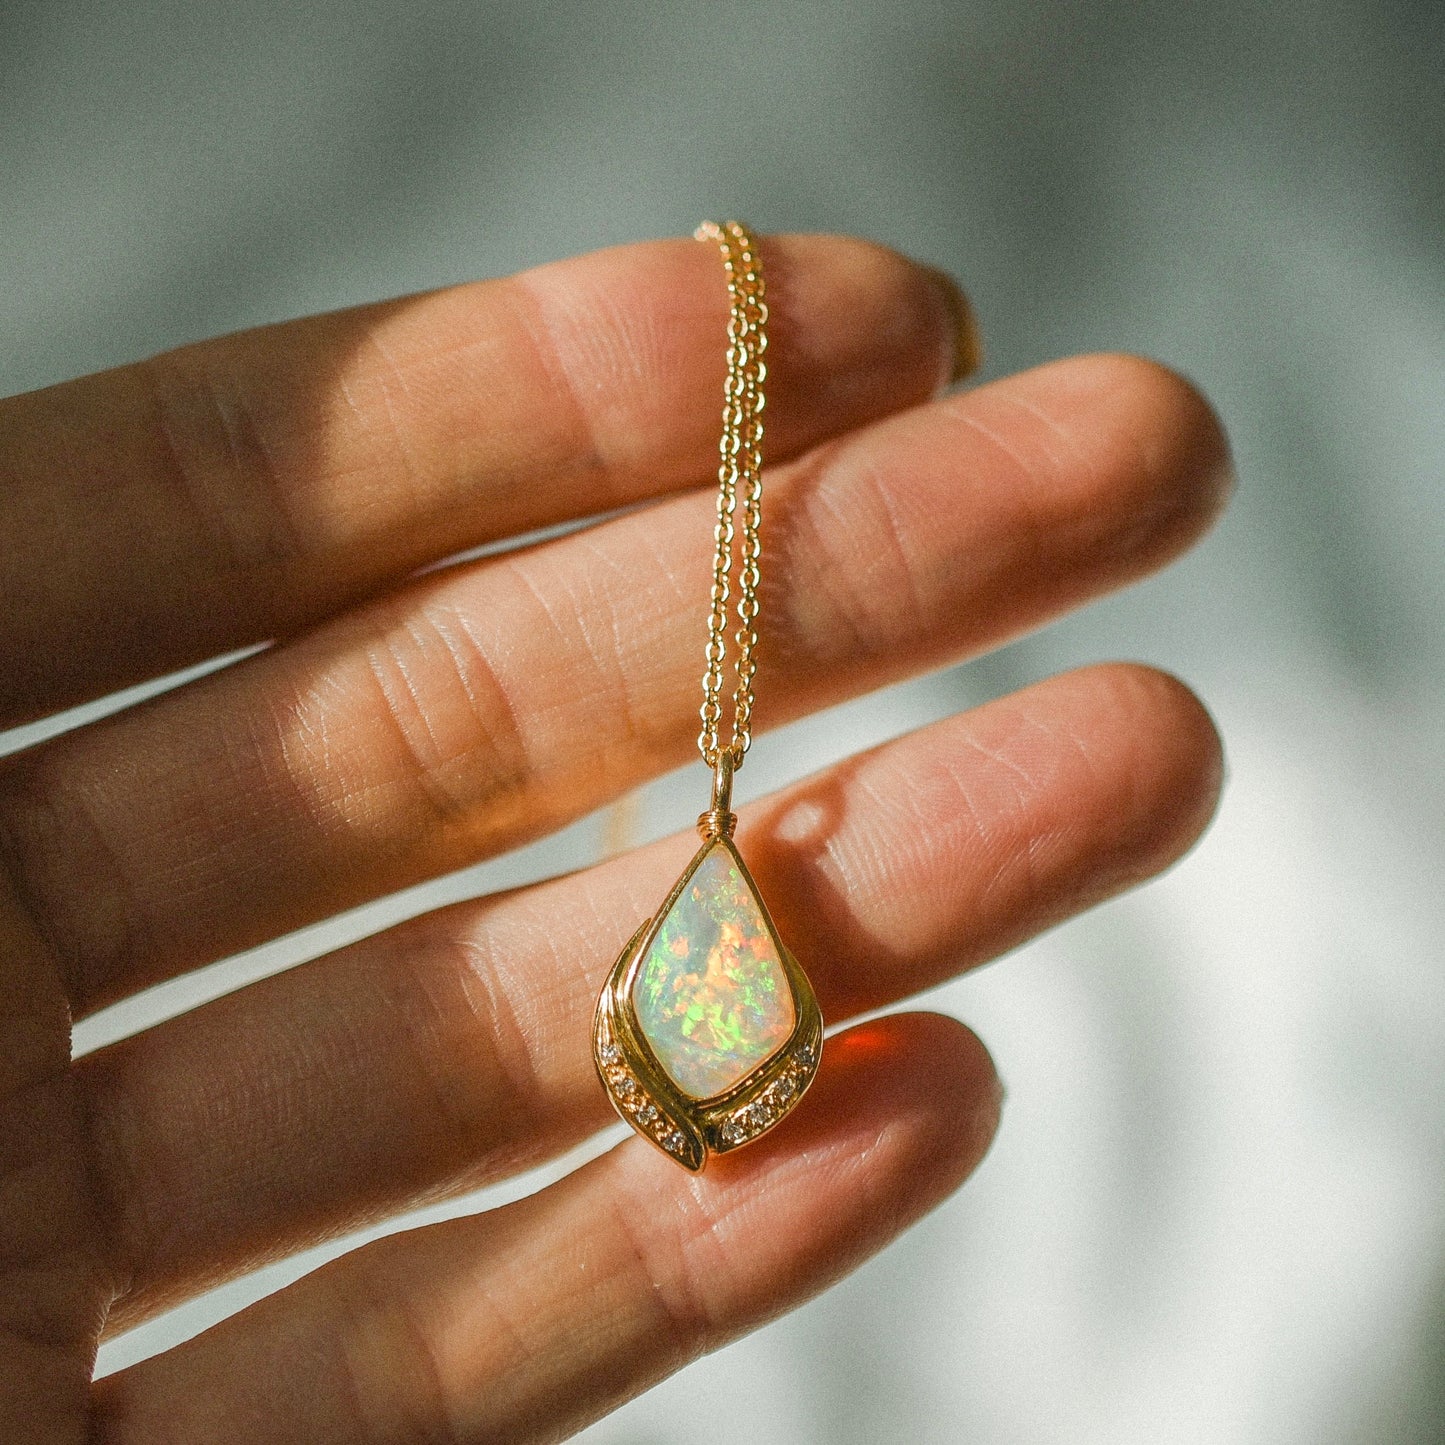 The Smoldering Opal Pendant